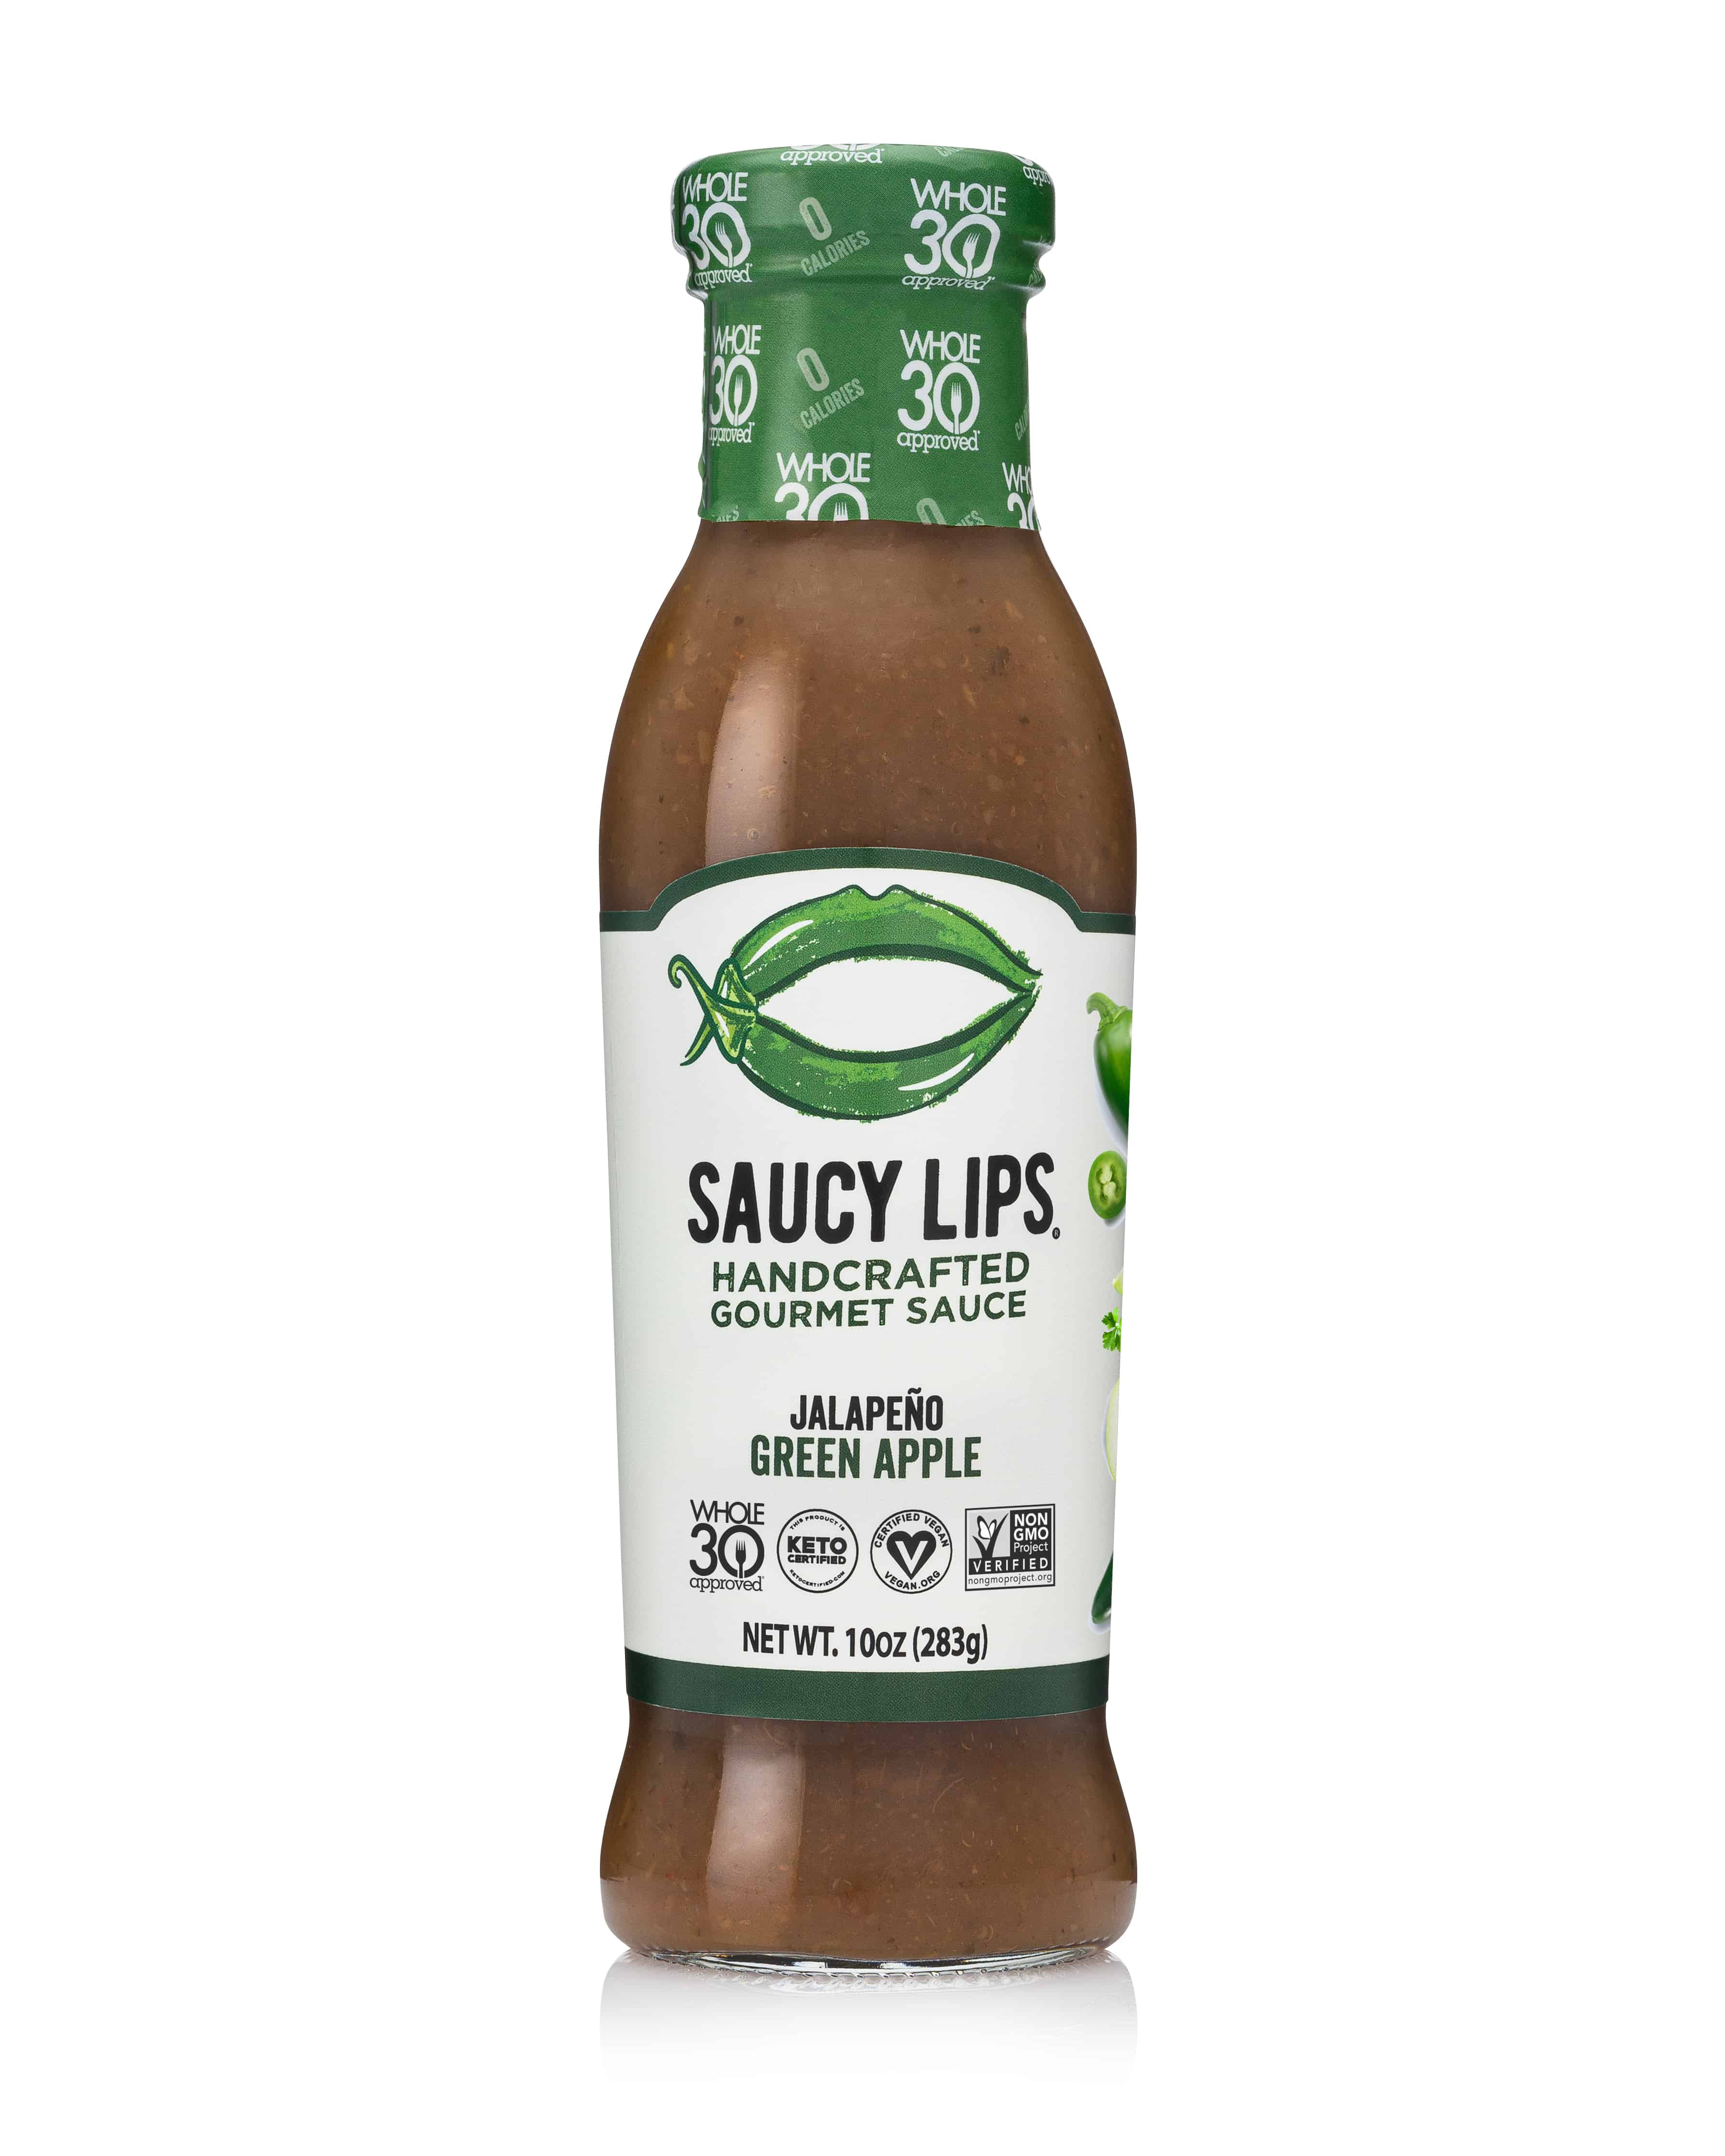 Saucy Lips Jalapeno Green Apple Gourmet Sauce 6 units per case